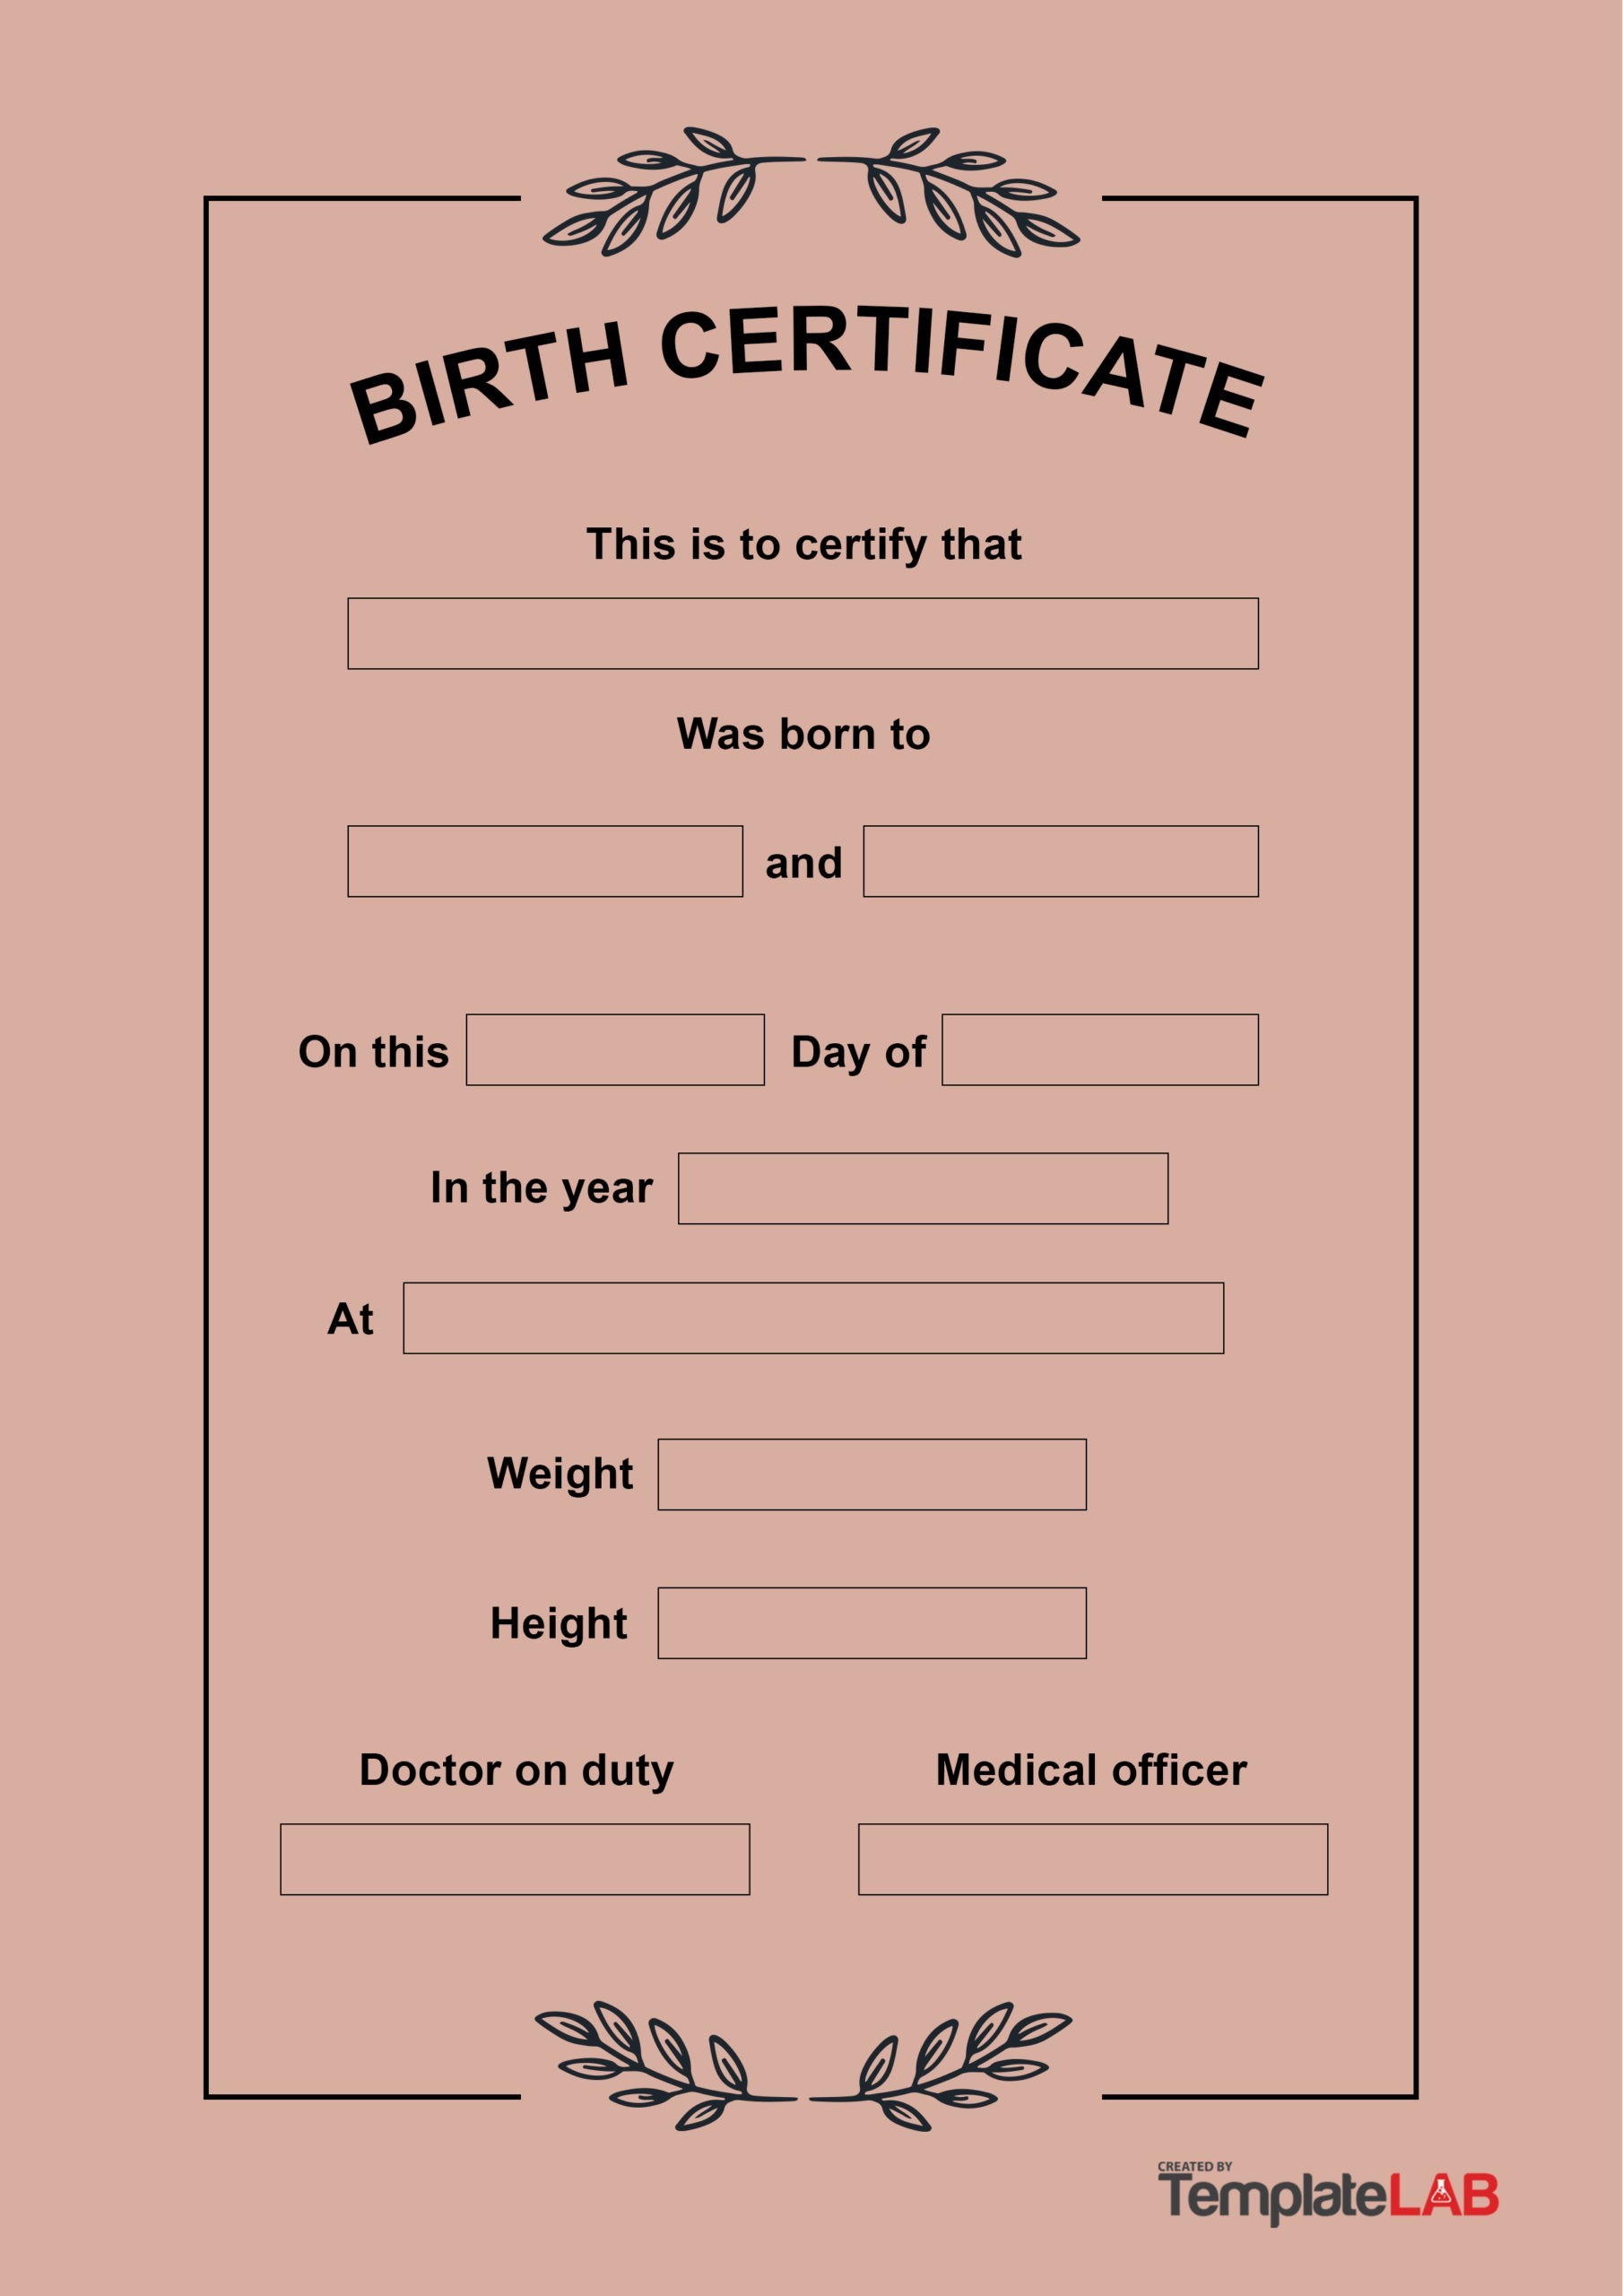 15 Birth Certificate Templates (Word PDF) ᐅ TemplateLab